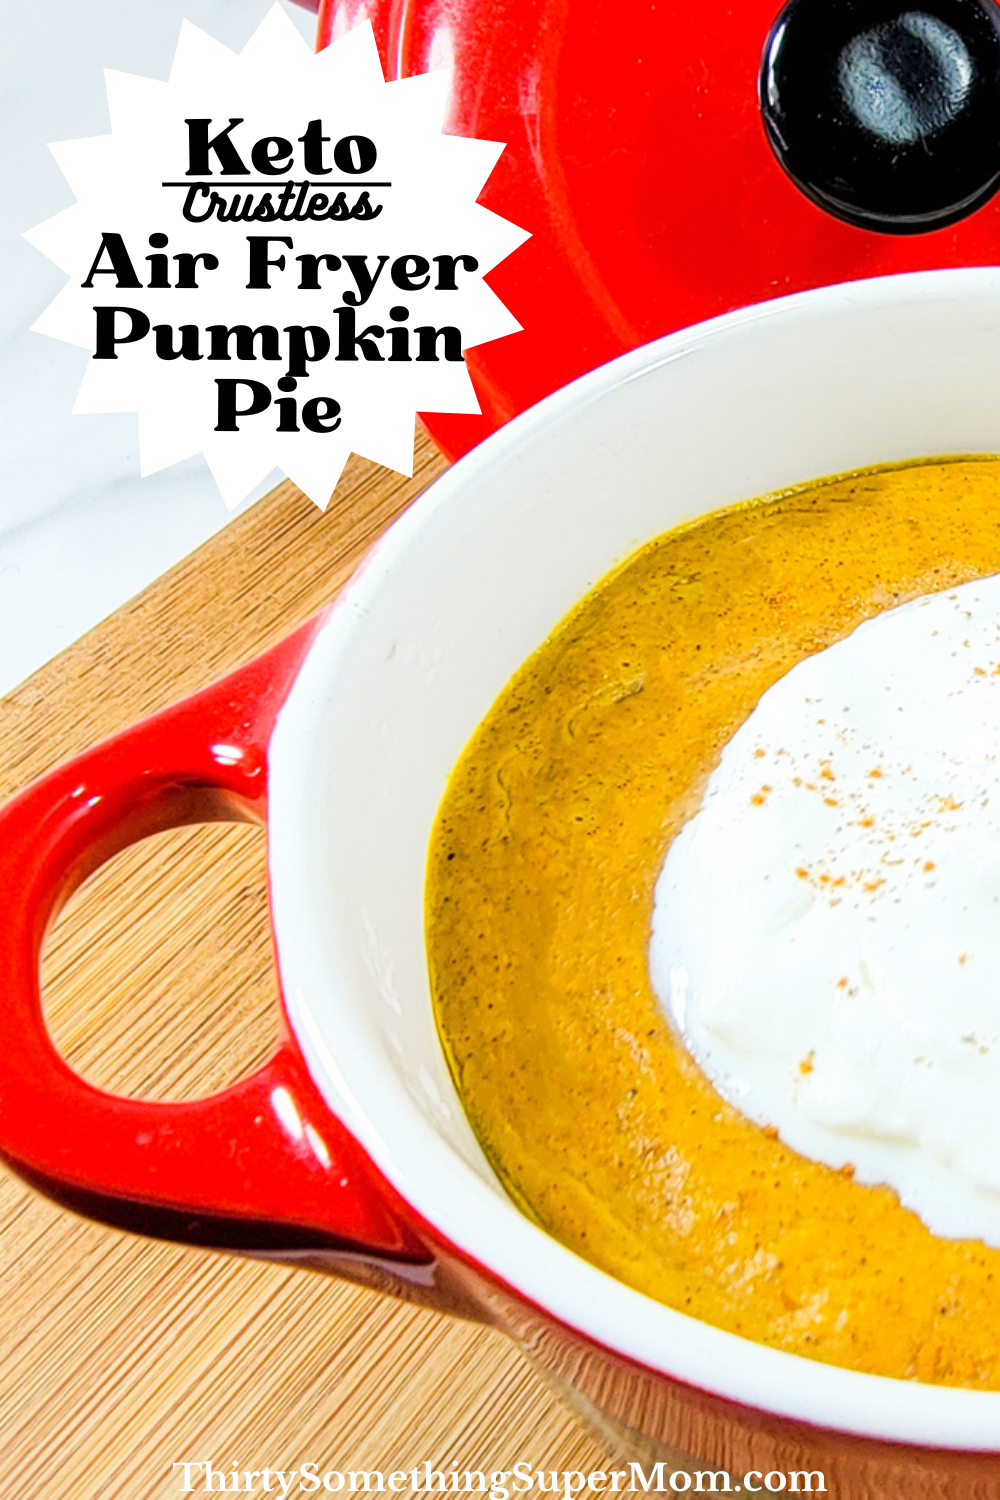 Keto Crustless Pumpkin Pie Recipe 